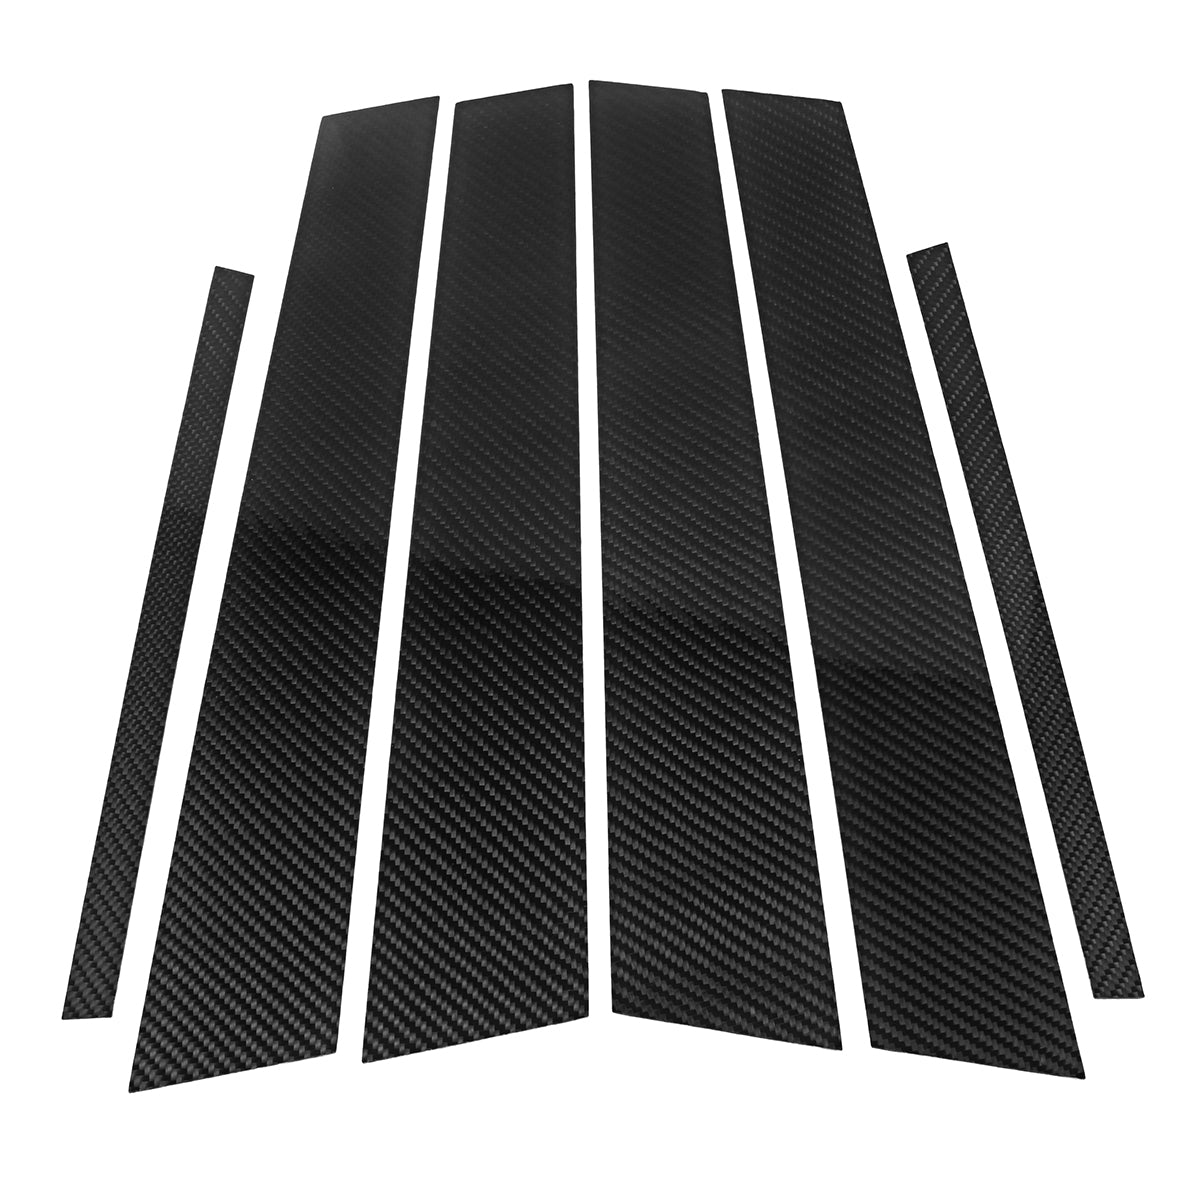 Dark Slate Gray Carbon Fiber Car Window B-pillars Molding Trim Car Styling Stickers for BMW 3 5 Series